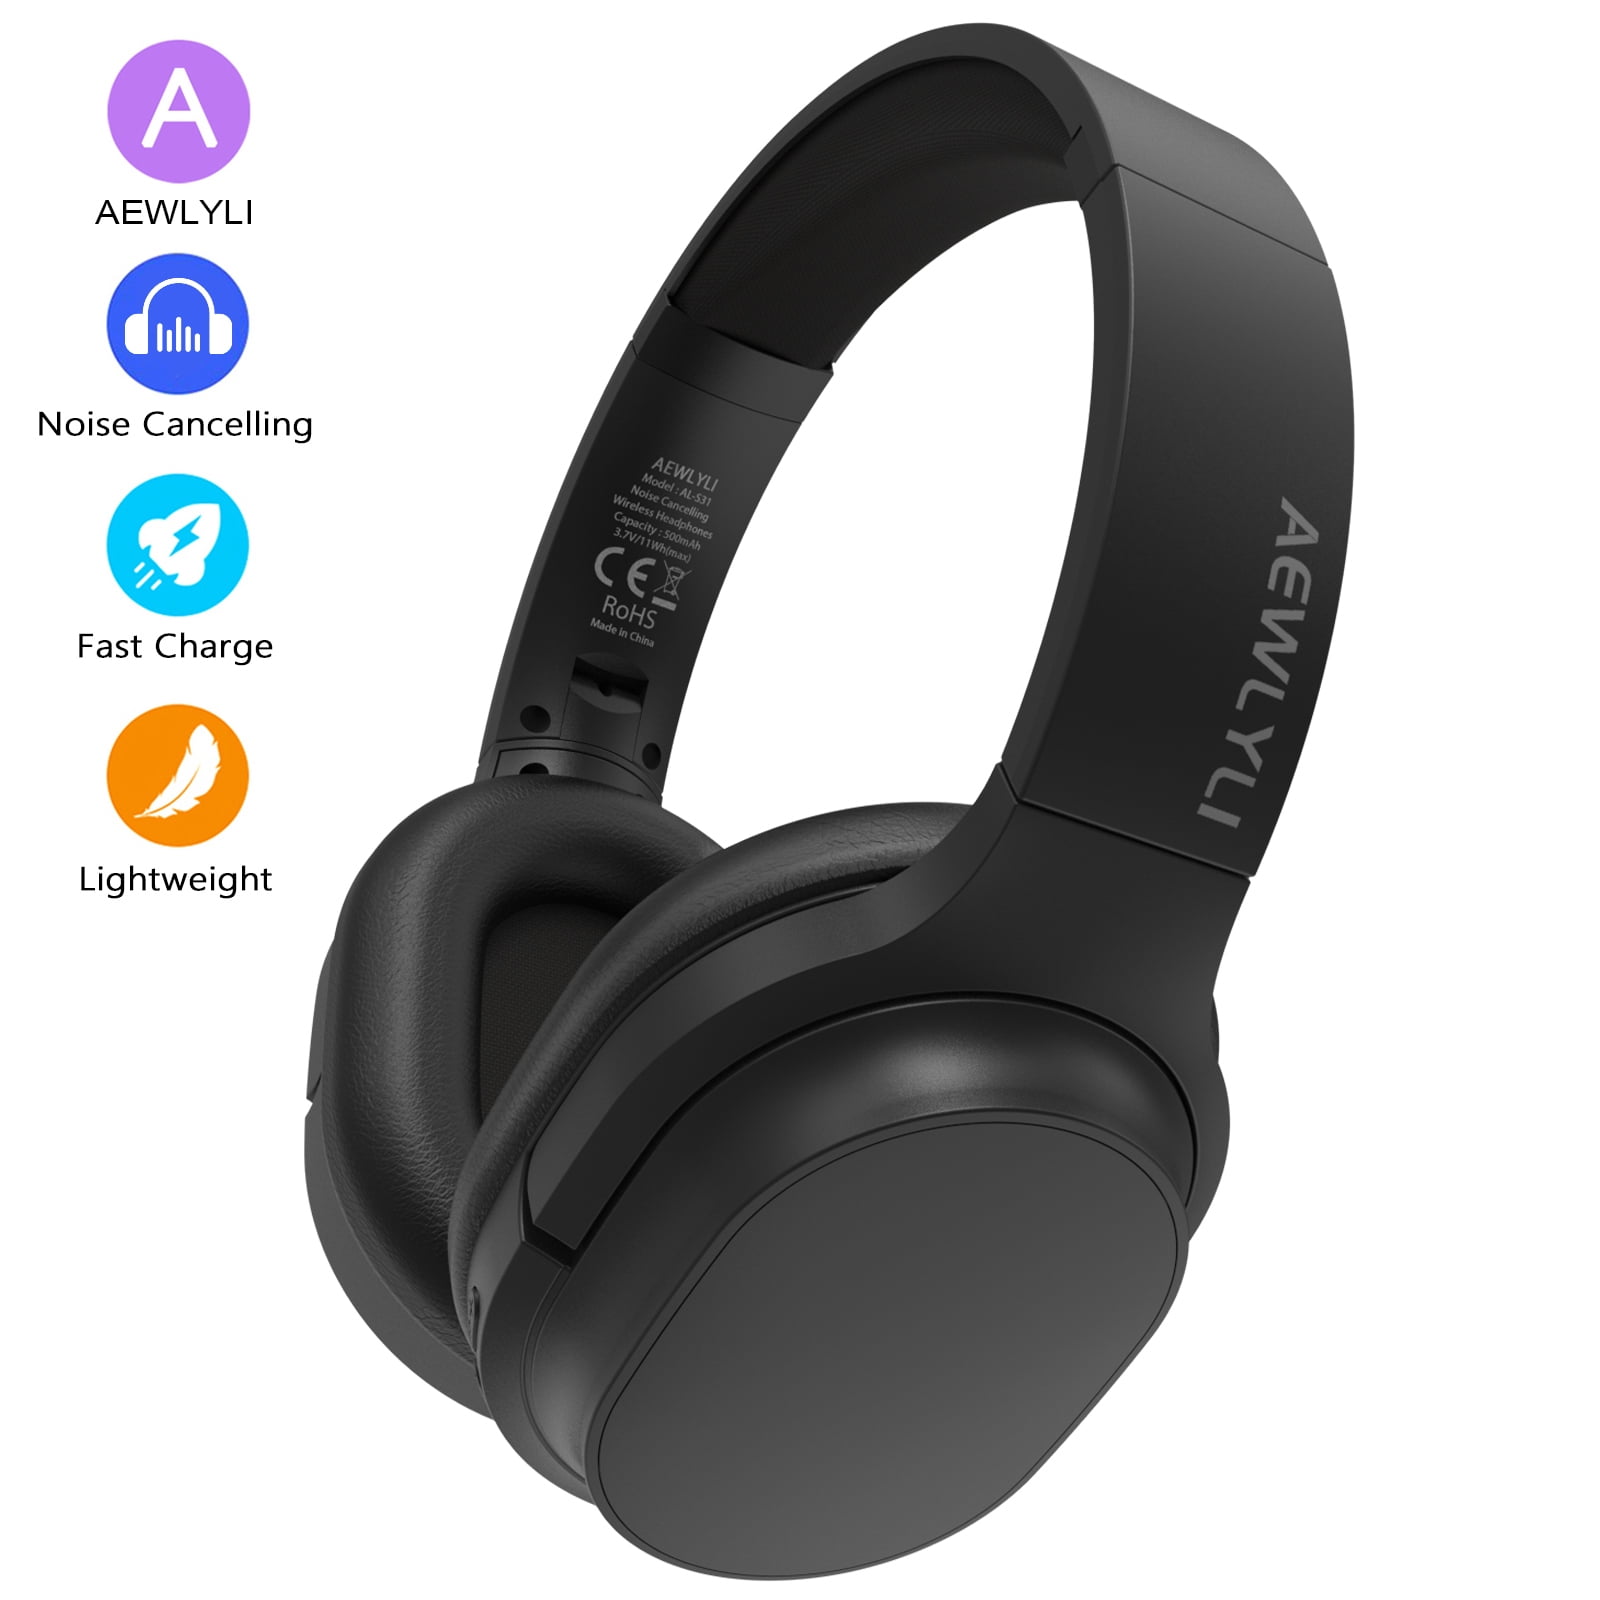 AEWLYLI Noise Cancelling Headphones,Wireless Bluetooth over Ear  Headphones,Foldable Stereo Microphone,Memory Foam Earpads,Mic,S31 - Black 